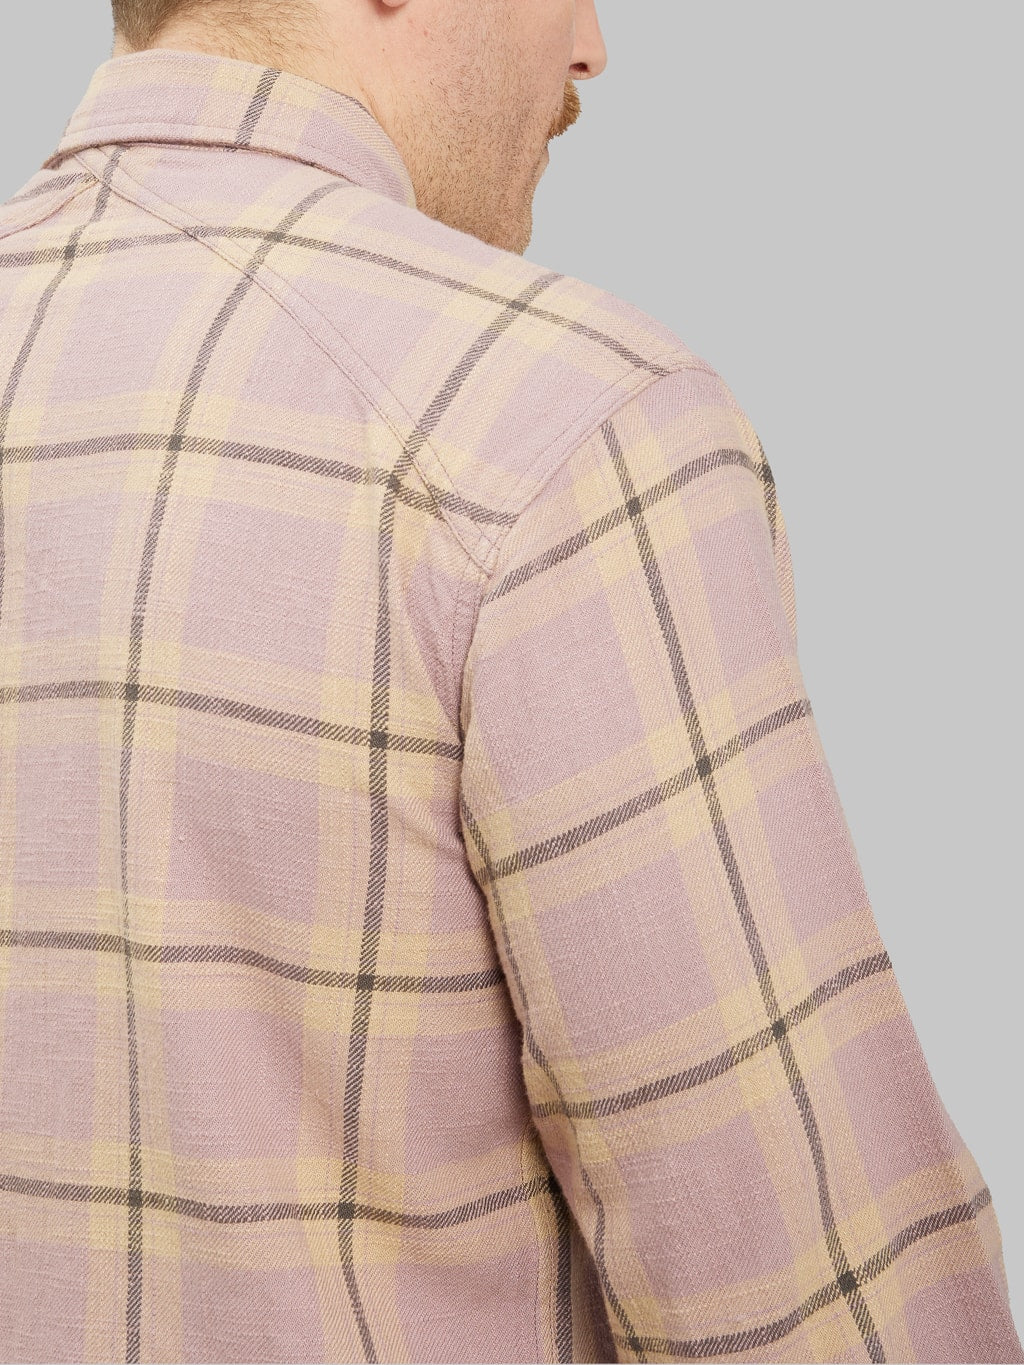 3sixteen Crosscut Flannel Mauve Slub Check shirt back yoke detail